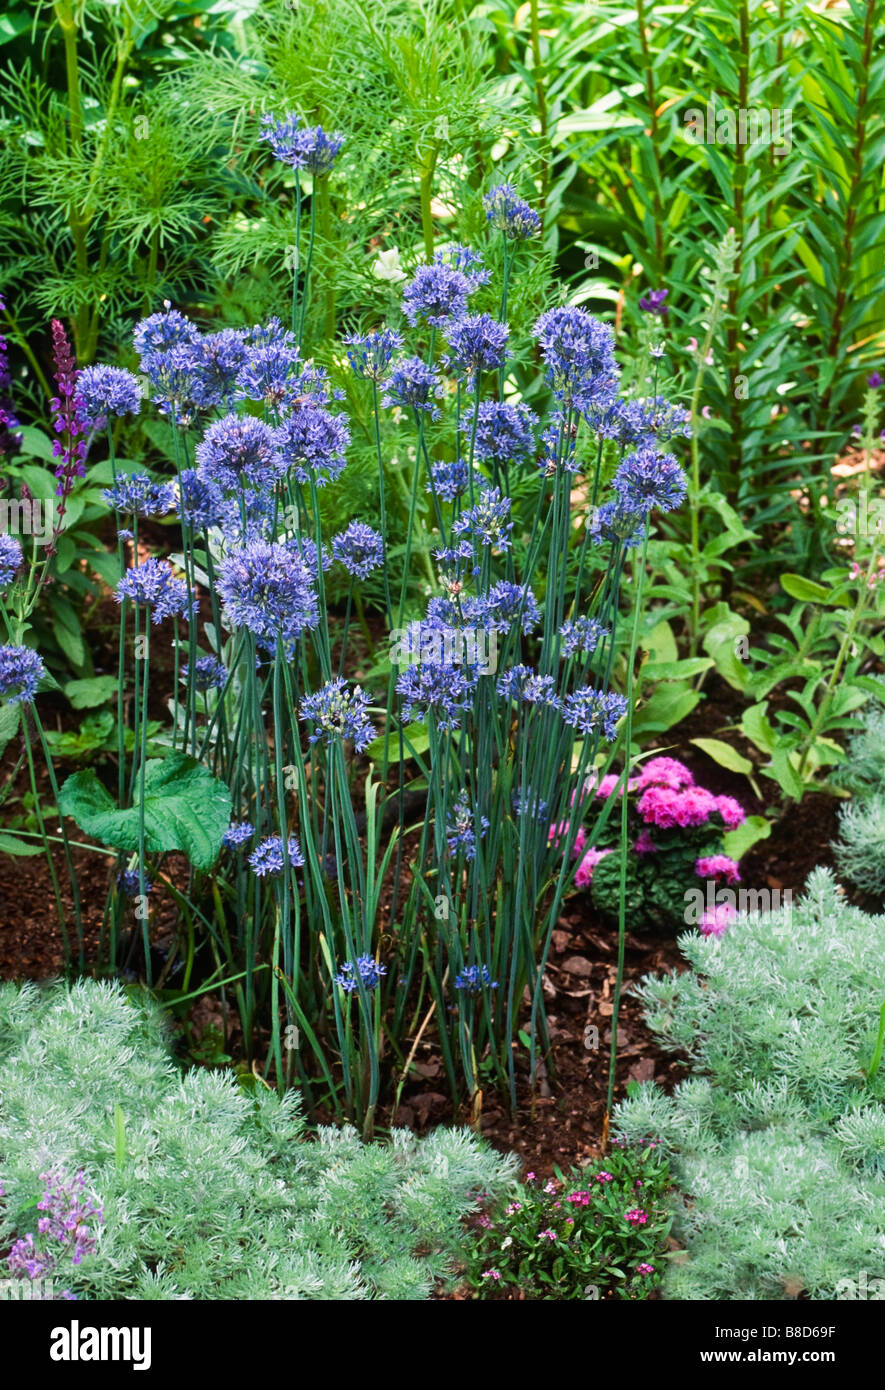 Allium caeruleum/Allium azureum (blue globe onion) bloms in early summer garden; looks great with plants with silver foliage. Stock Photo